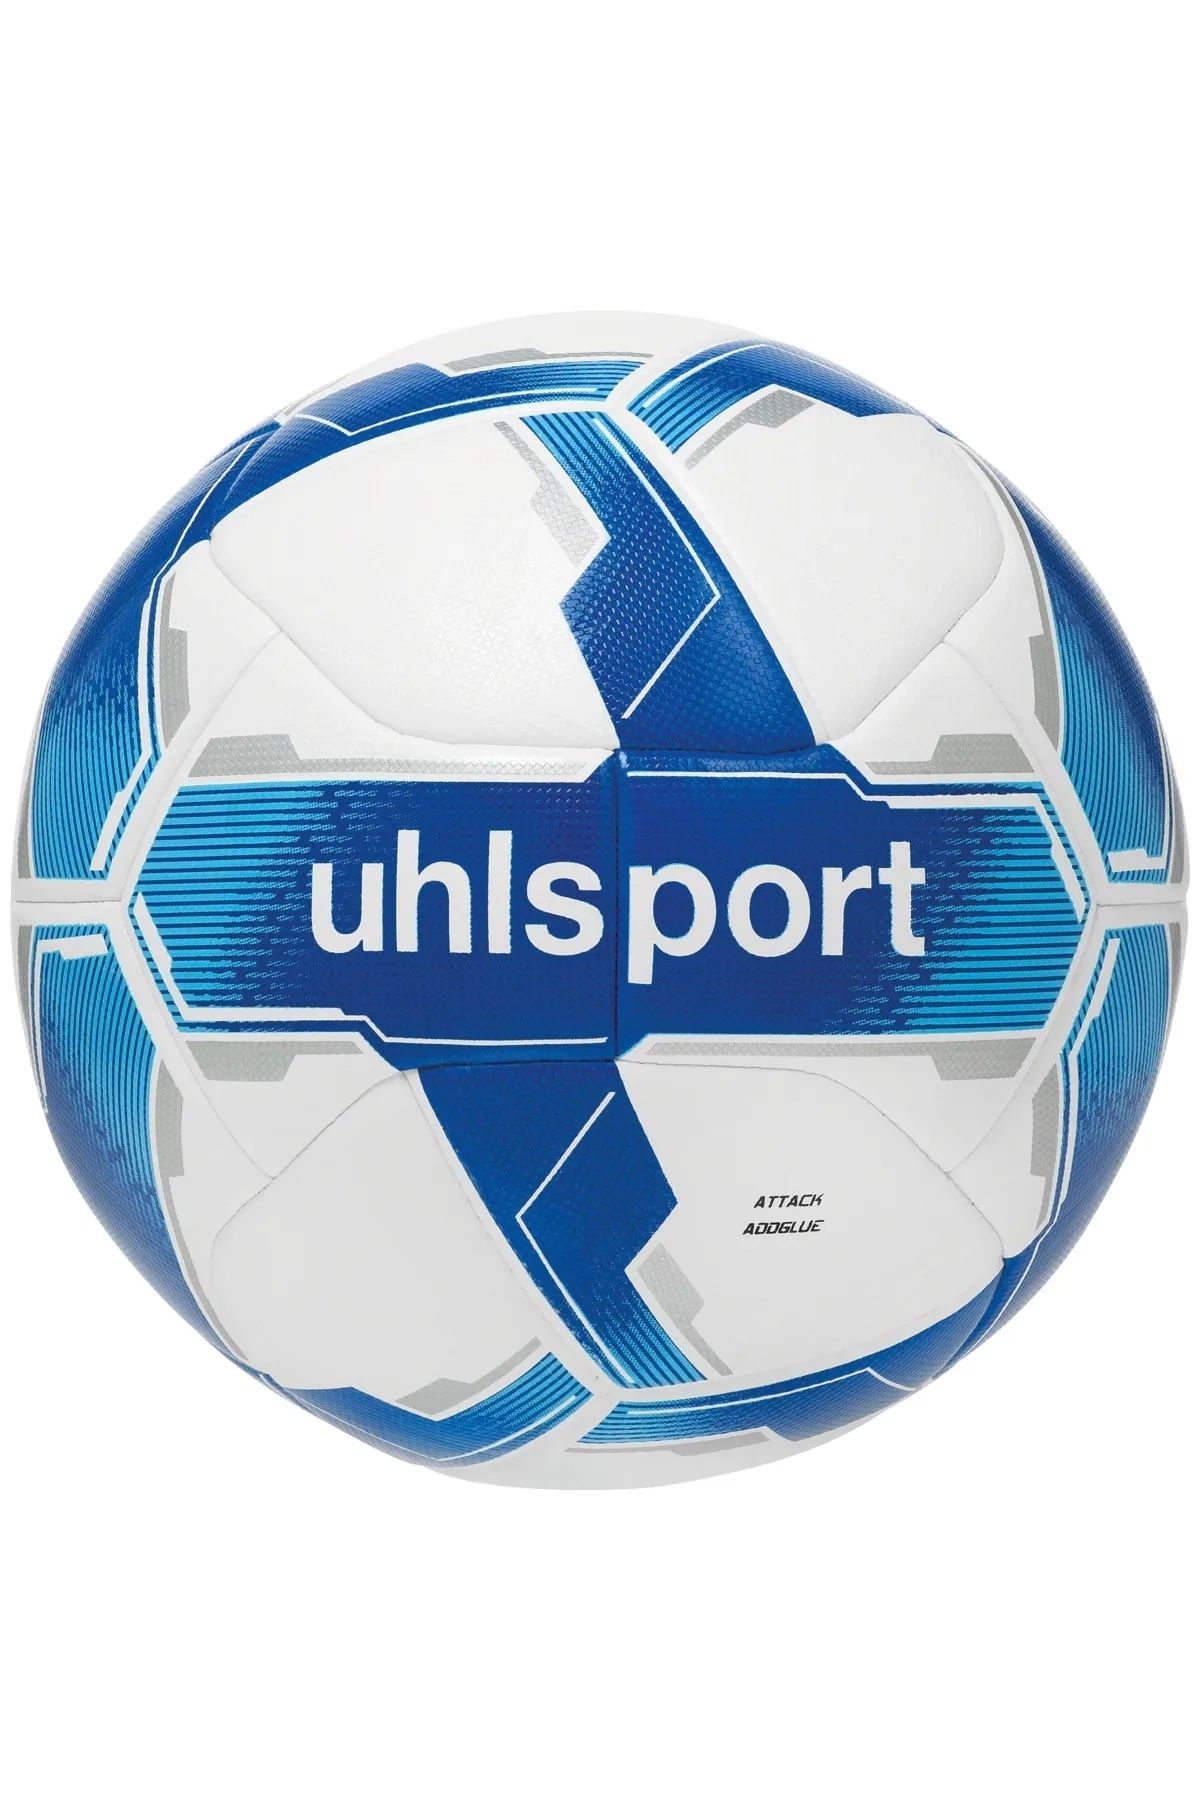 uhlsport Attack Addglue Hybrid Fifa Basic Futbol Topu No:5 100175101